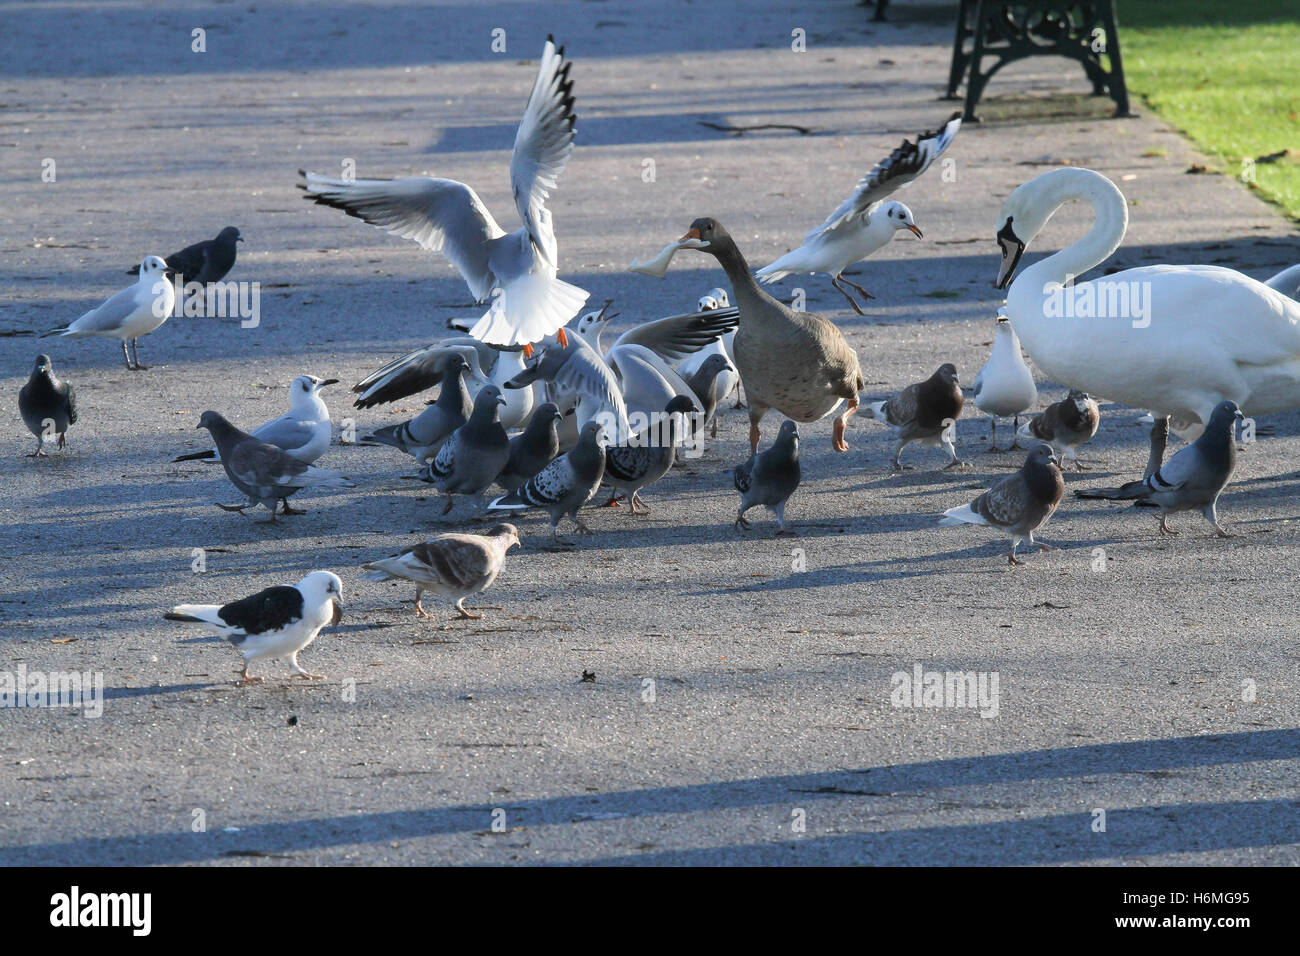 Wild birds fighting for bread at Lurgan Park Lake, Lurgan, County Armagh, Northern Ireland. Stock Photo